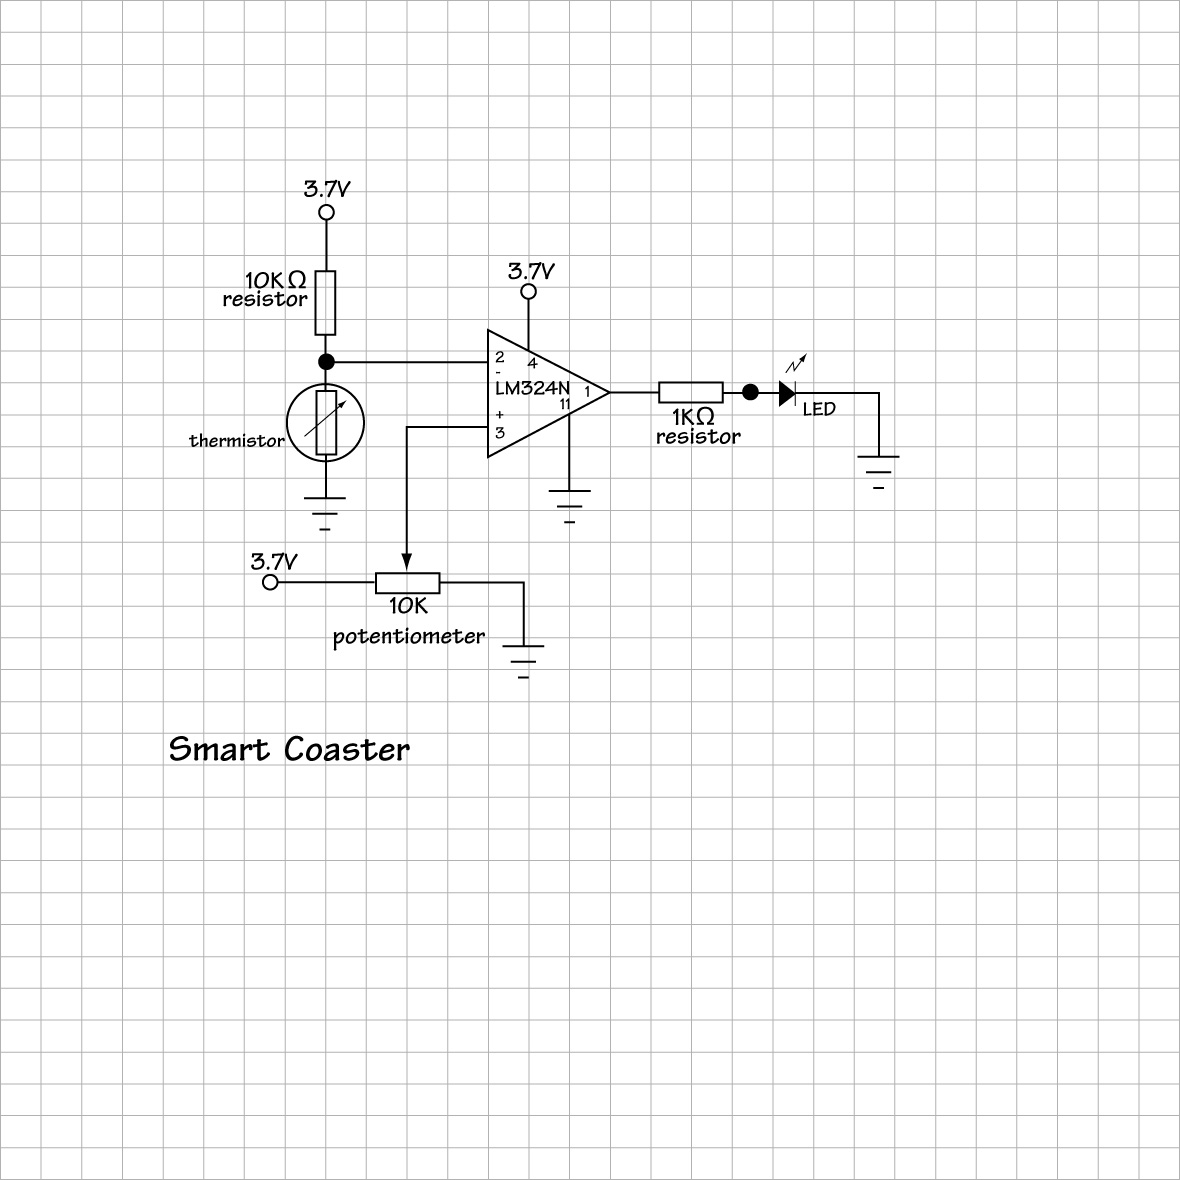 Smart coaster schematic.